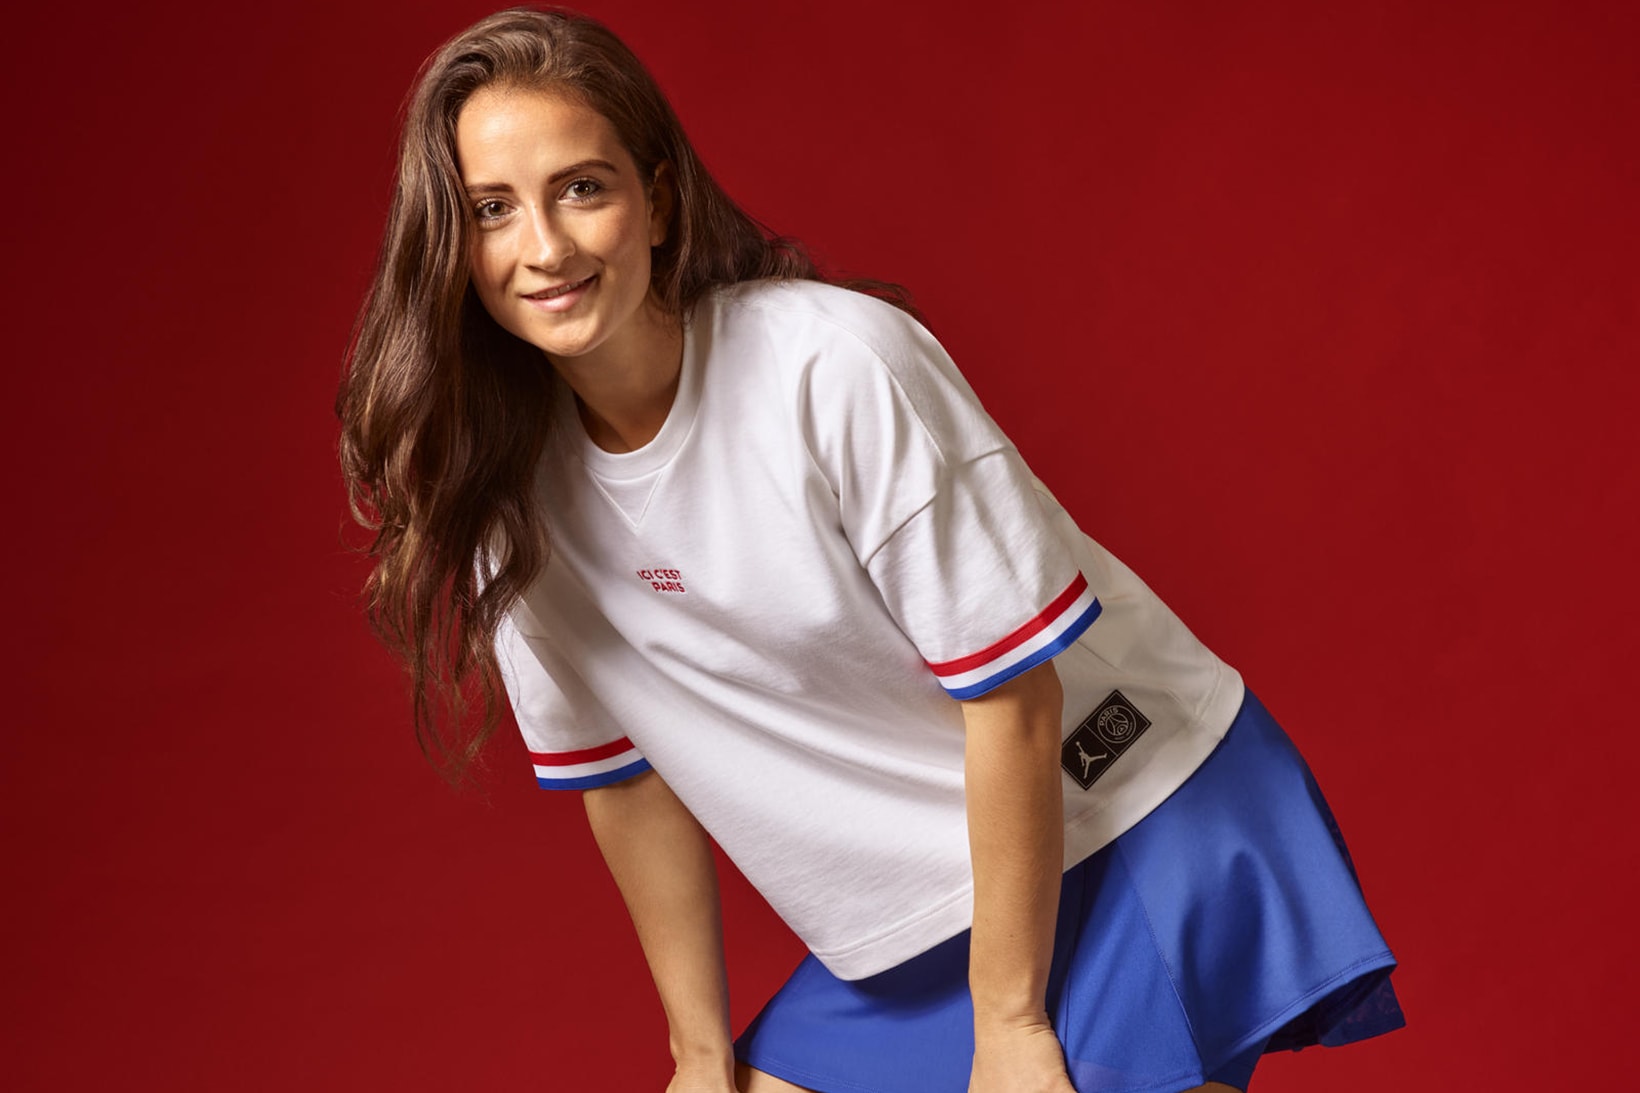 nike jordan brand paris saint germain collaboration womens jacket hoodie dress sportswear athleisure white red blue sneakers